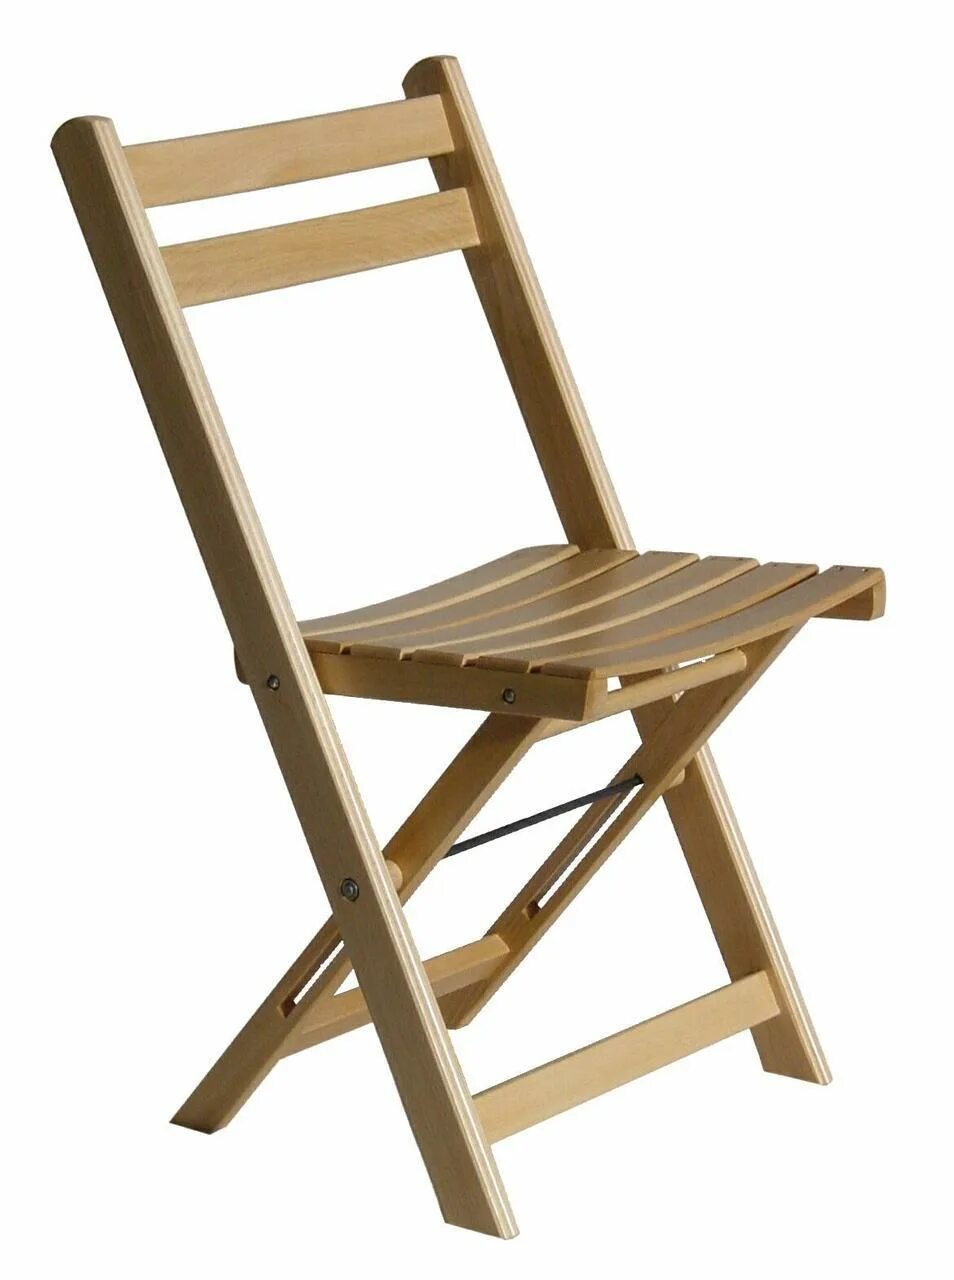 Стул Chair (Чаир) раскладной. Стул садовый раскладной артикул 497191. Стул раскладной деревянный. Стул складной деревянный.